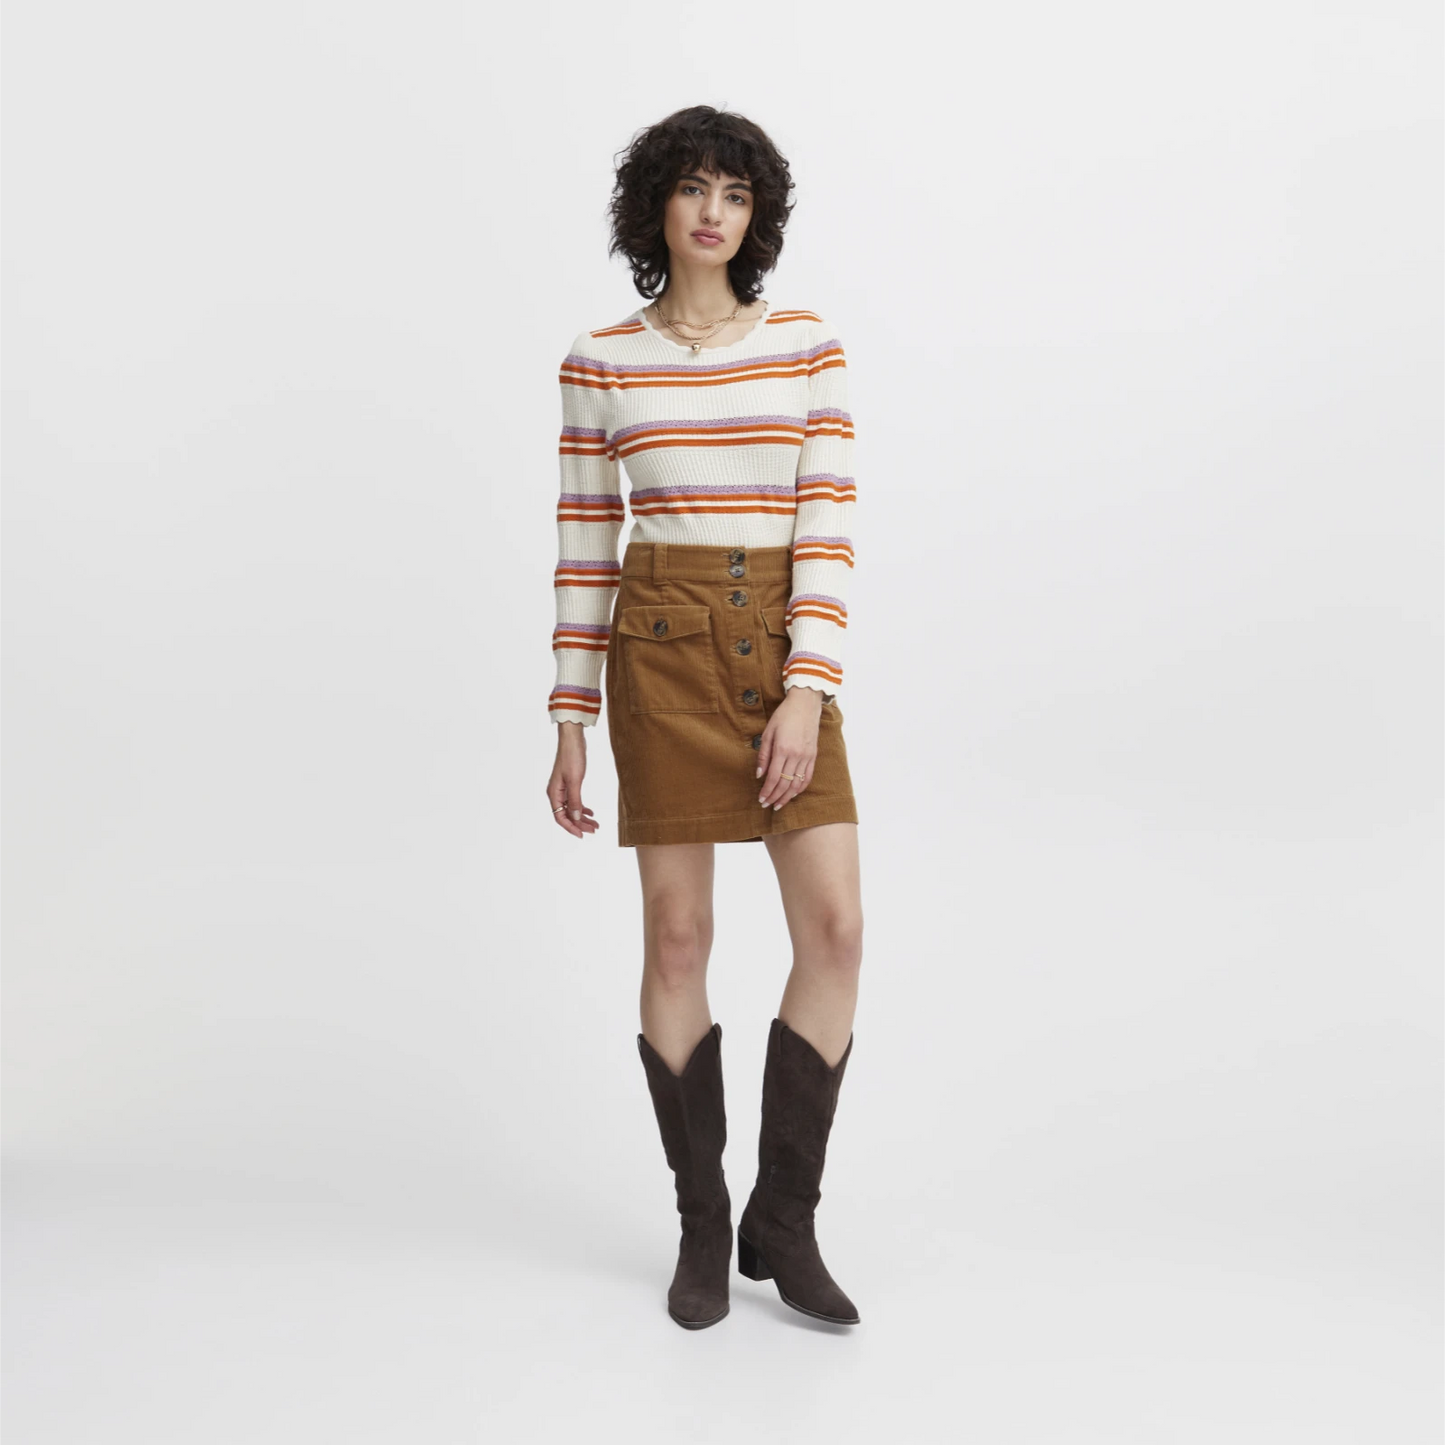 Irrosette nederdel i fløjl fra Atelier Rêve på model i fuld længde